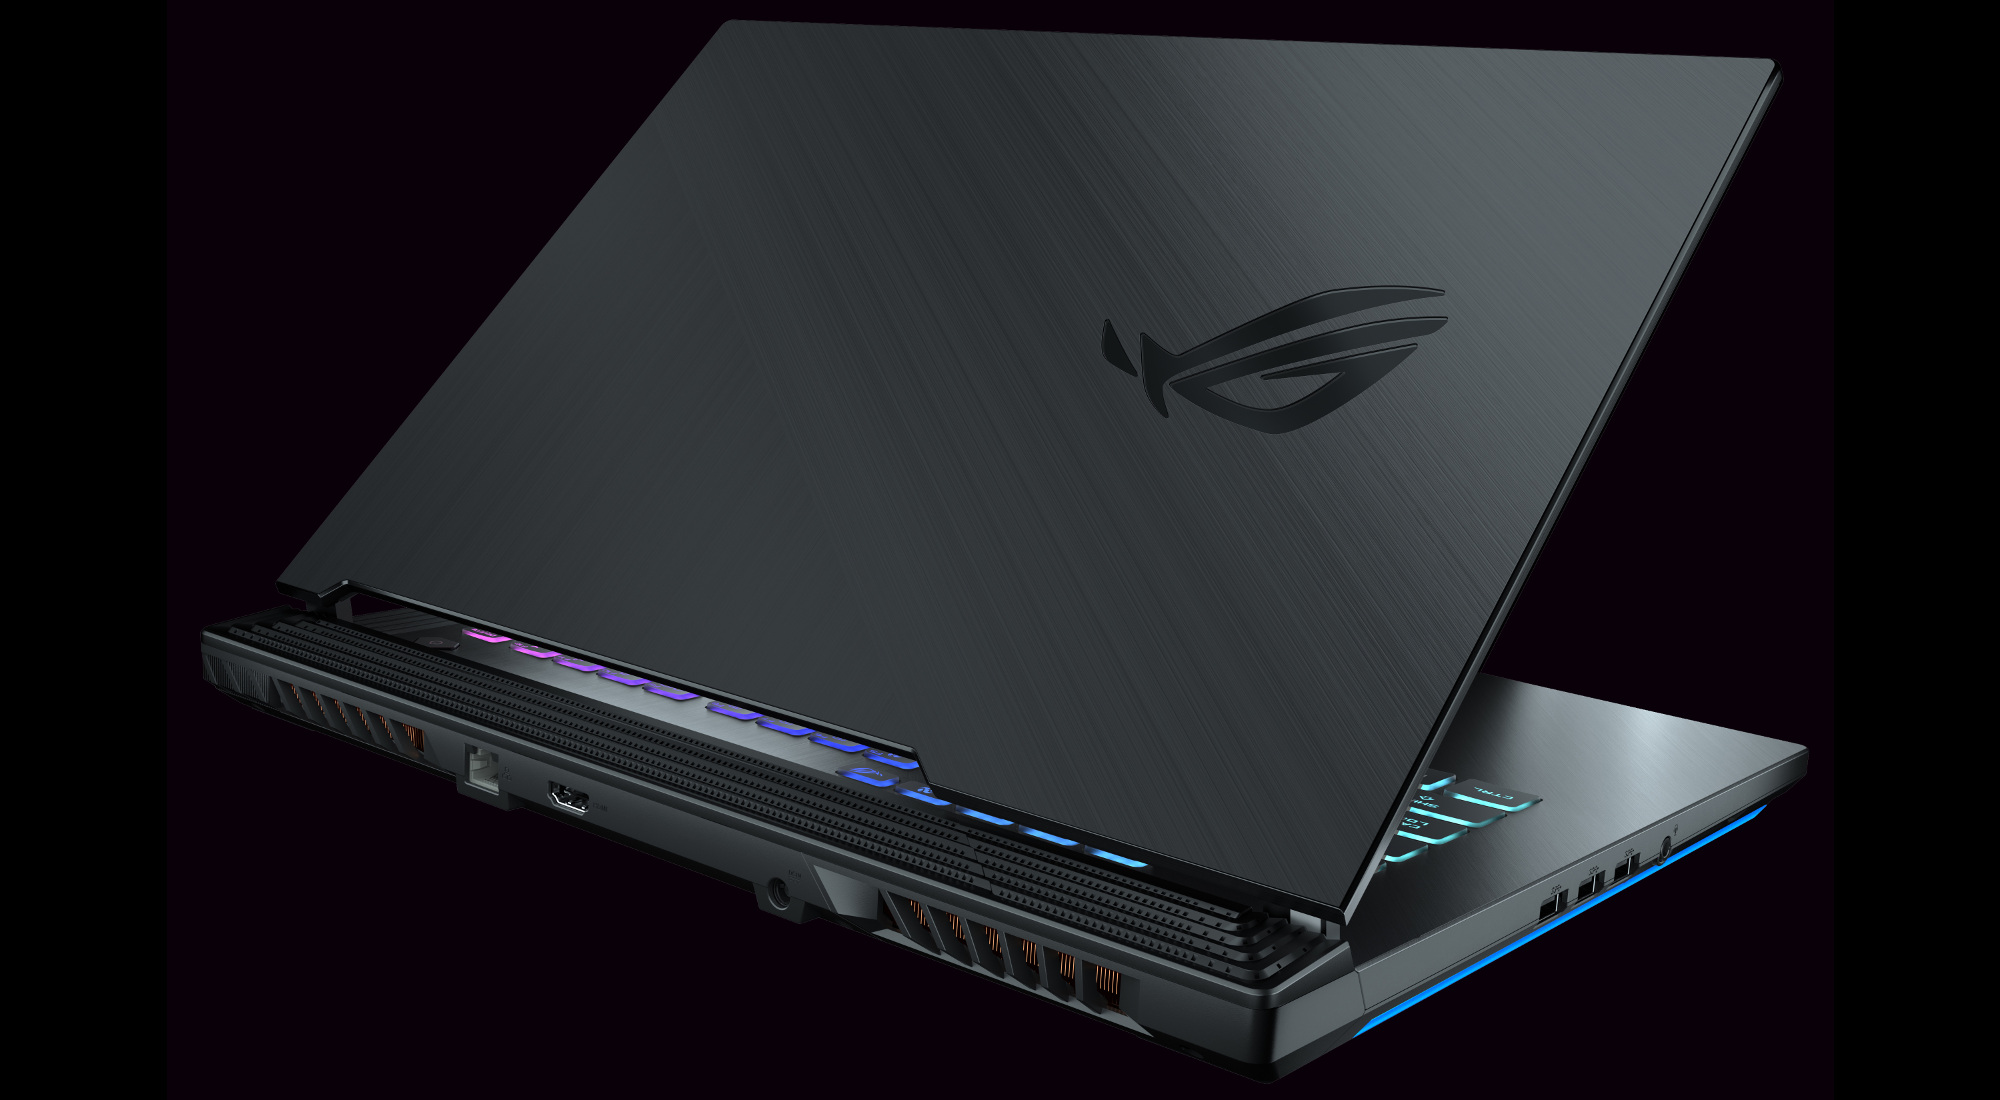 The ROG Strix G brings gaming fundamentals to affordable laptops 